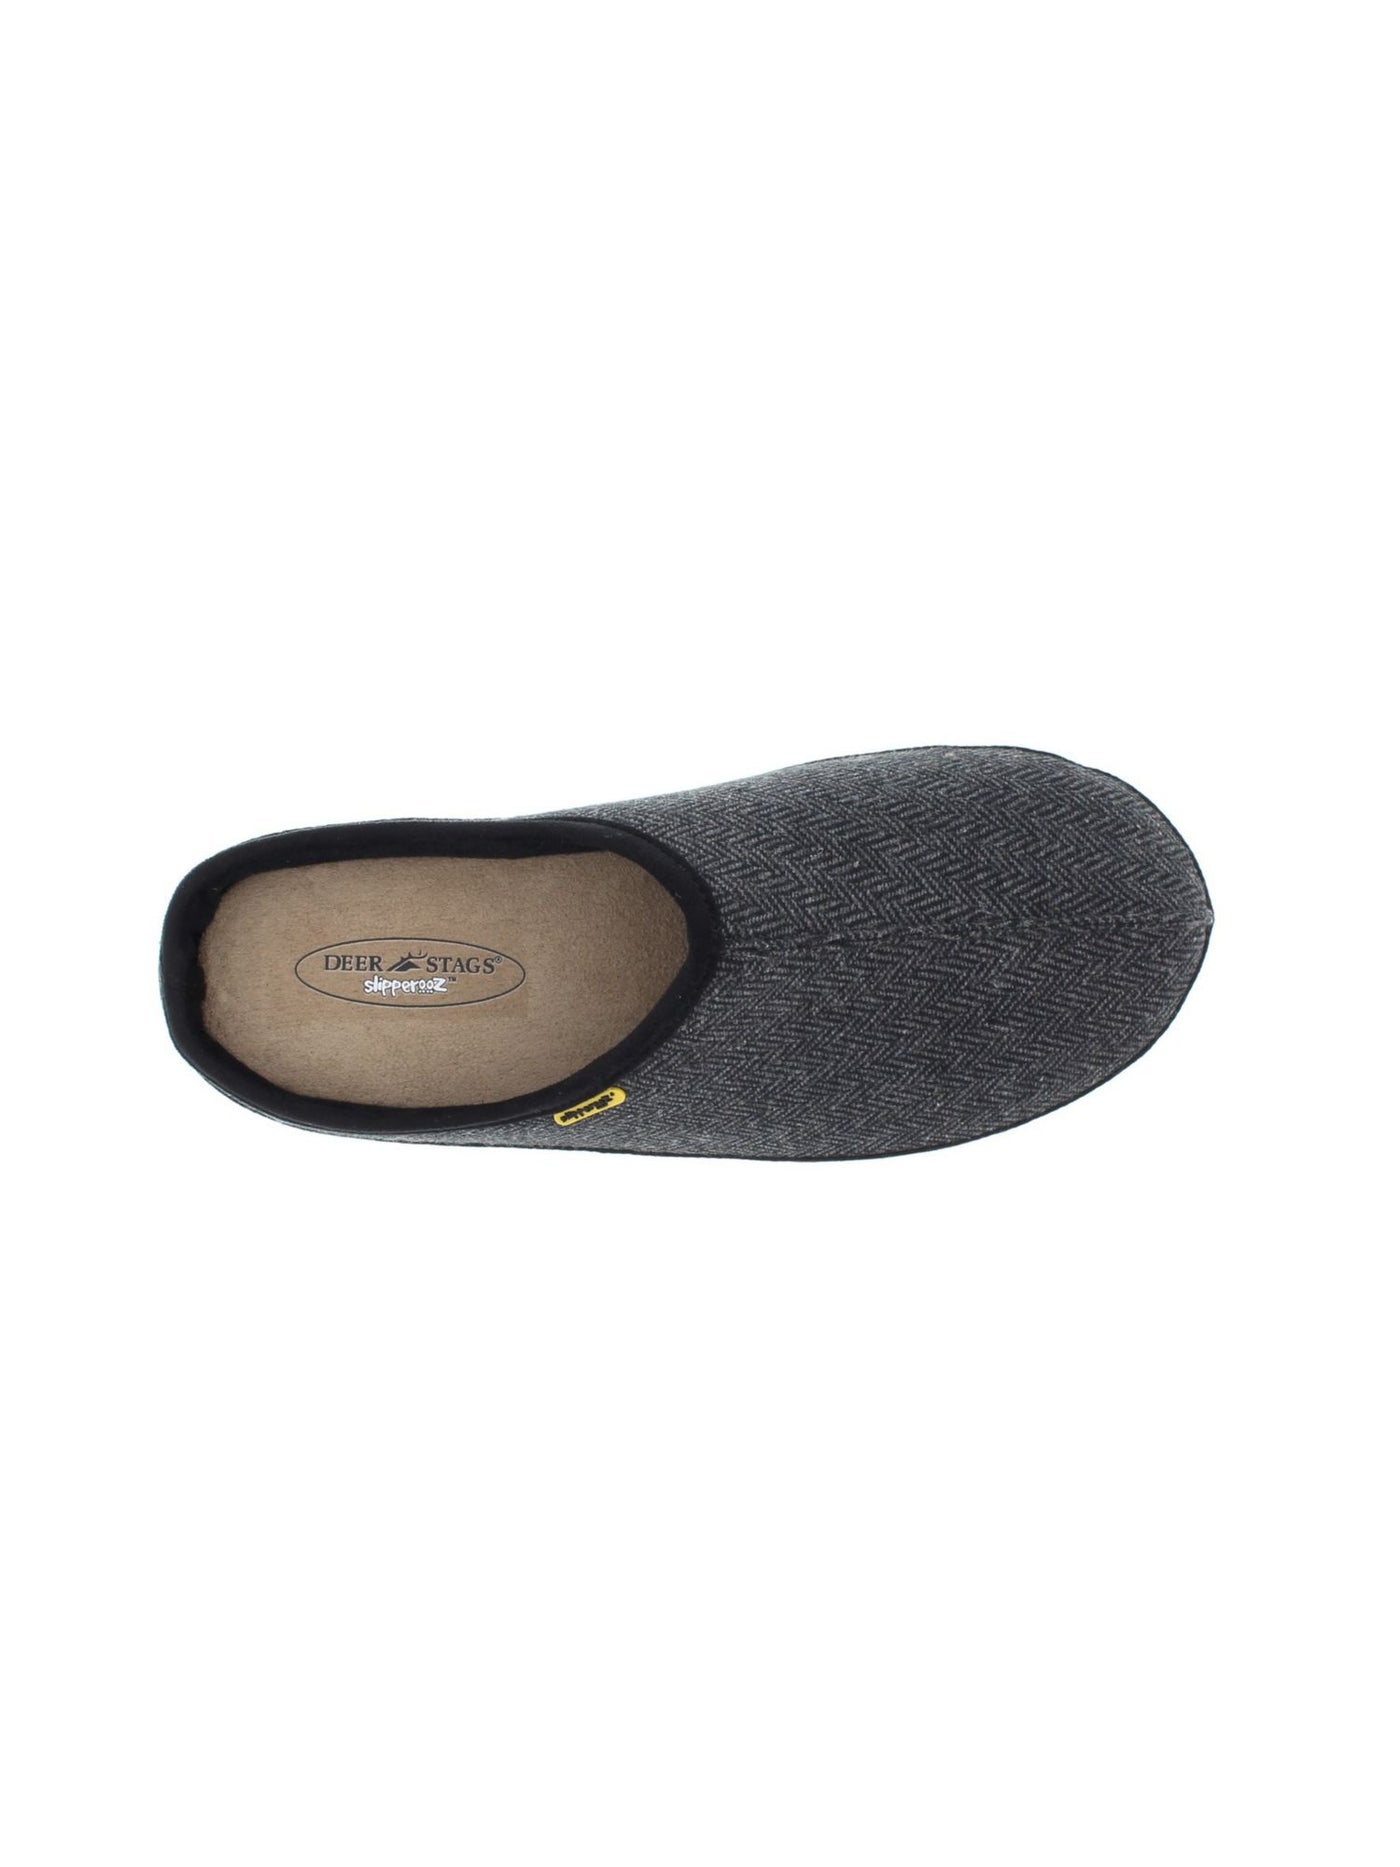 DEER STAGS Mens Gray Herringbone Padded Comfort Wherever Round Toe Platform Slip On Slippers Shoes 8 W